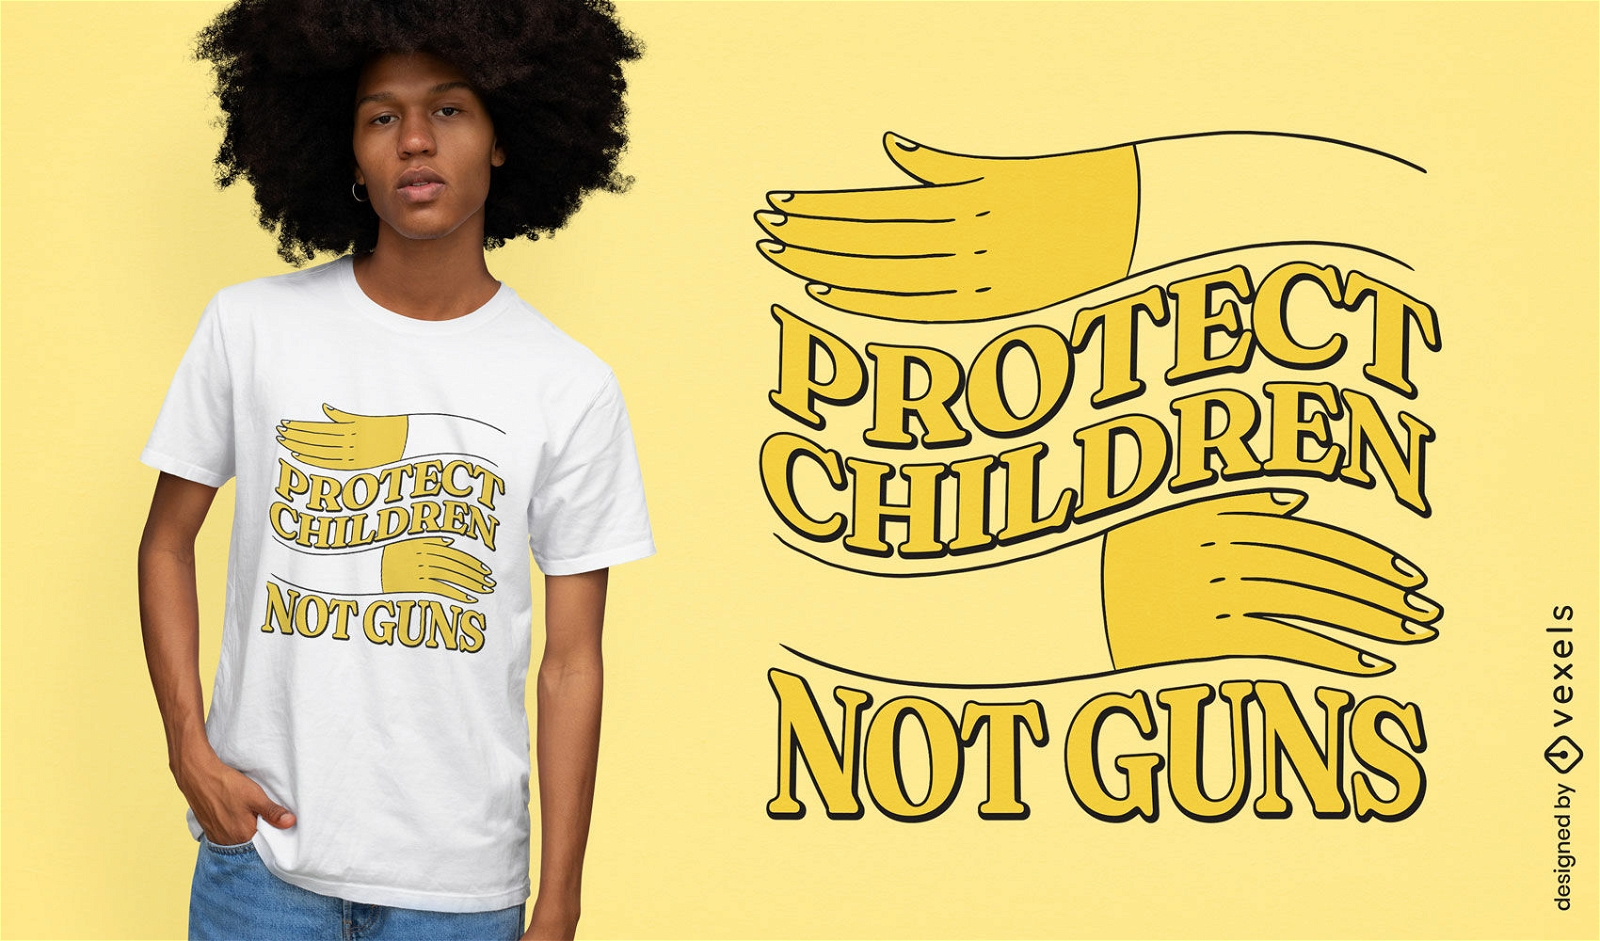 Protect children quote t-shirt design